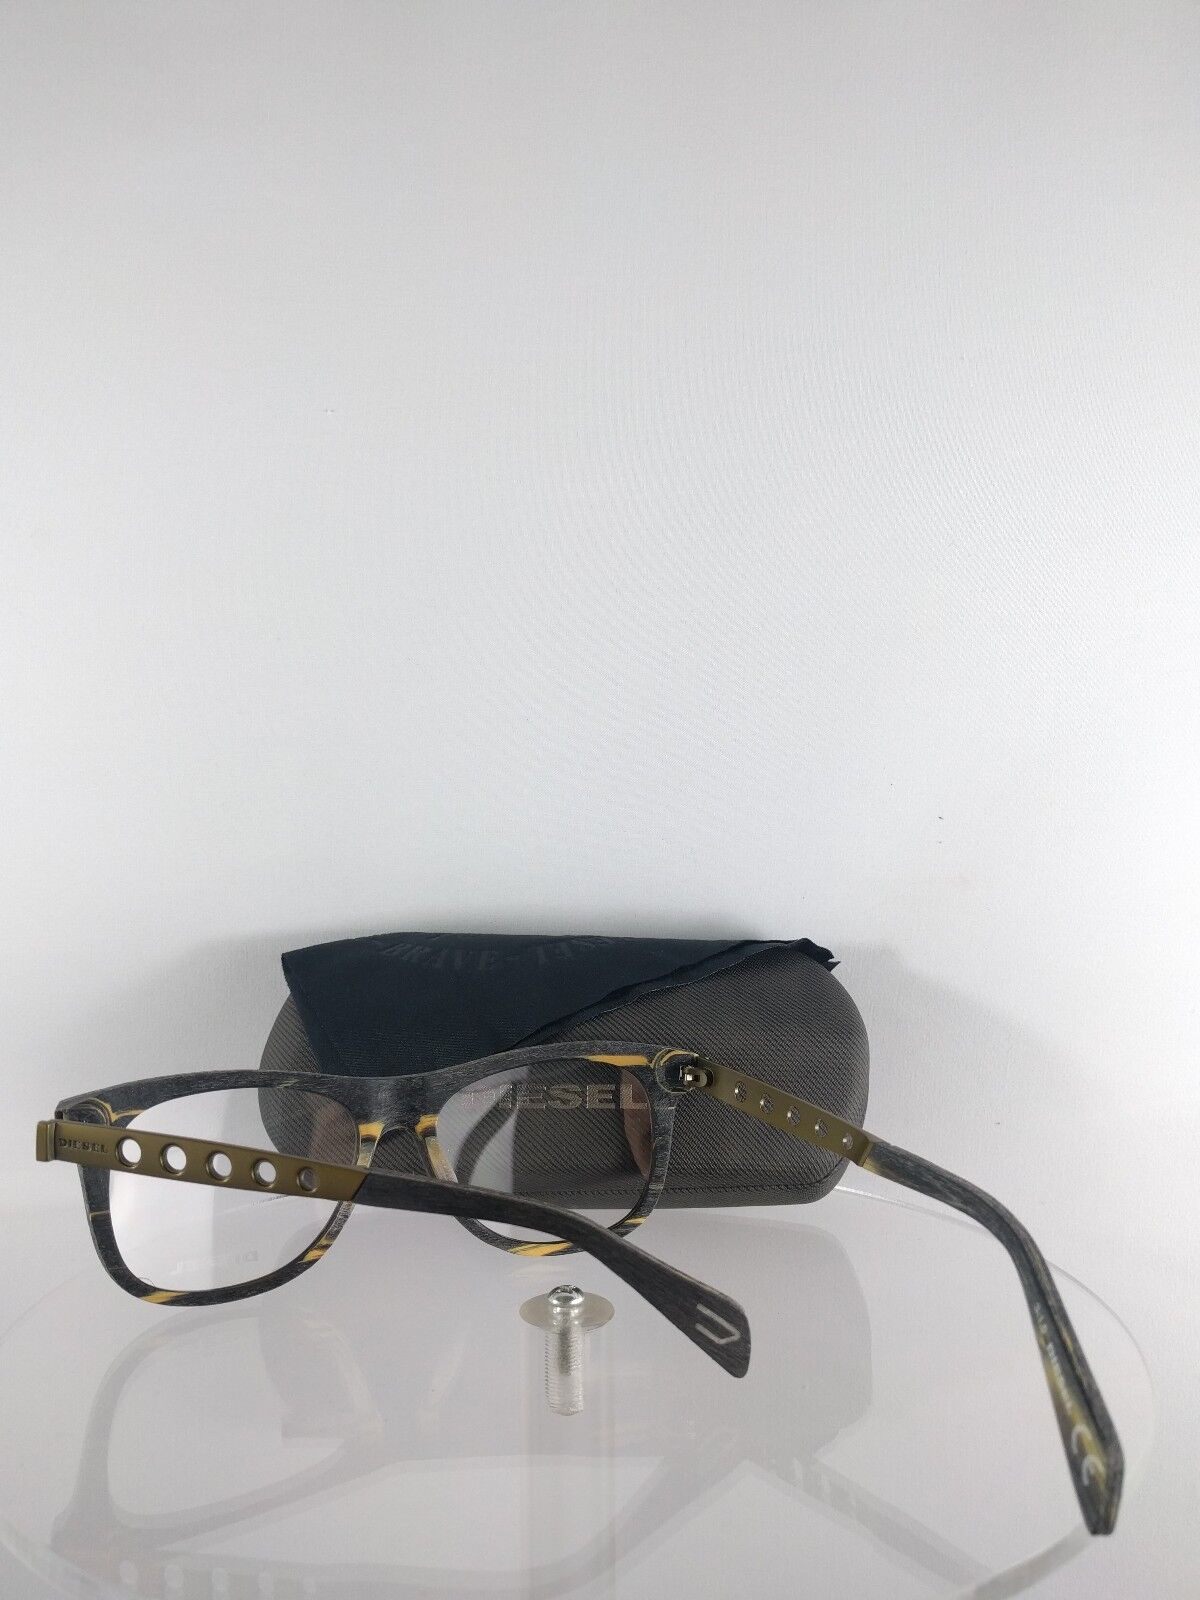 Brand New Authentic Diesel Eyeglasses DL. 5115 Col. 005 54mm